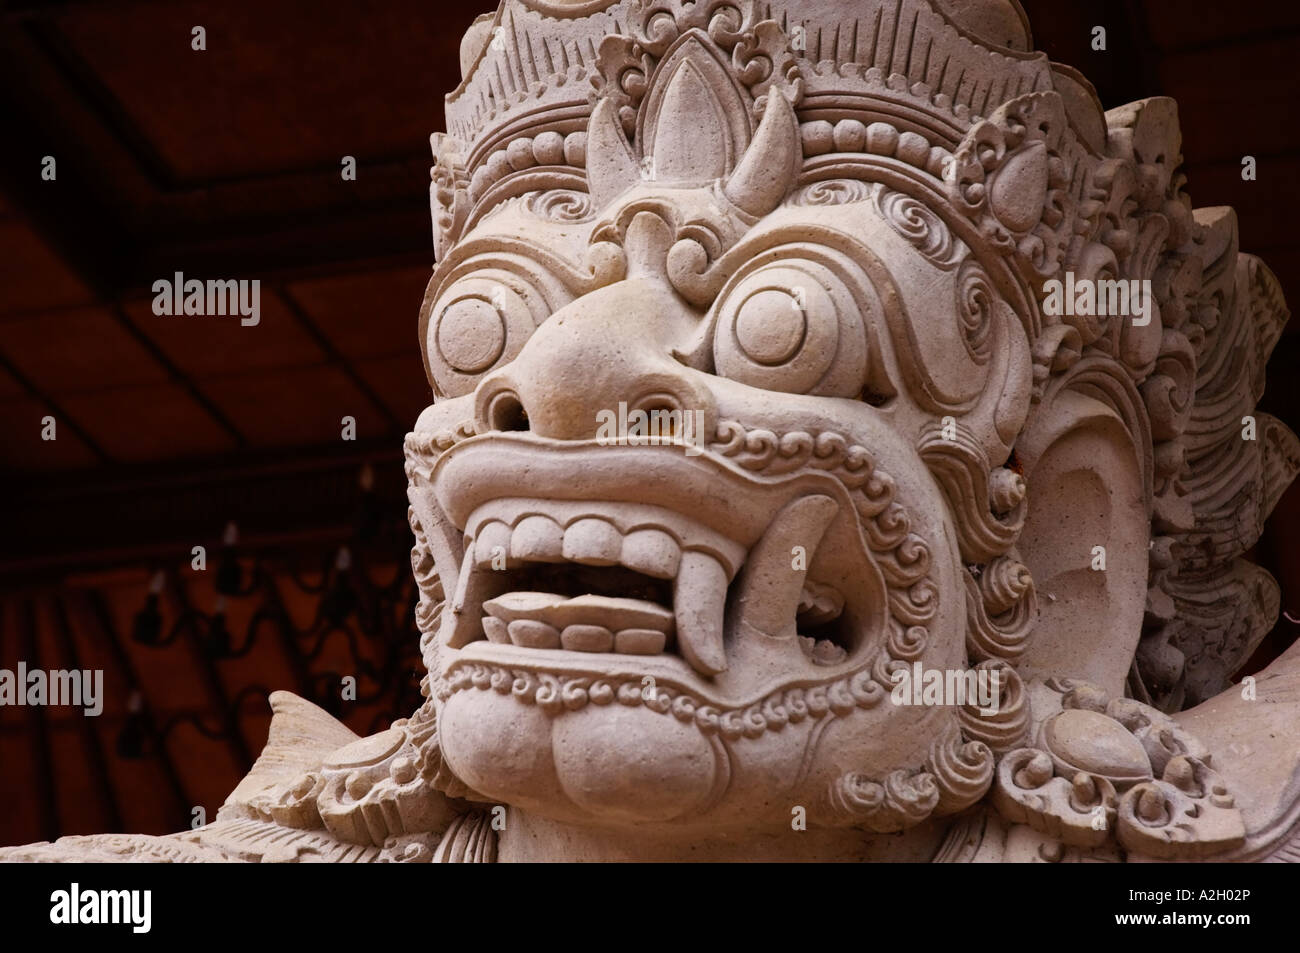 Indonesia Bali Ubud Agung Rai Museum of Art ARMA face of guardian statue Stock Photo